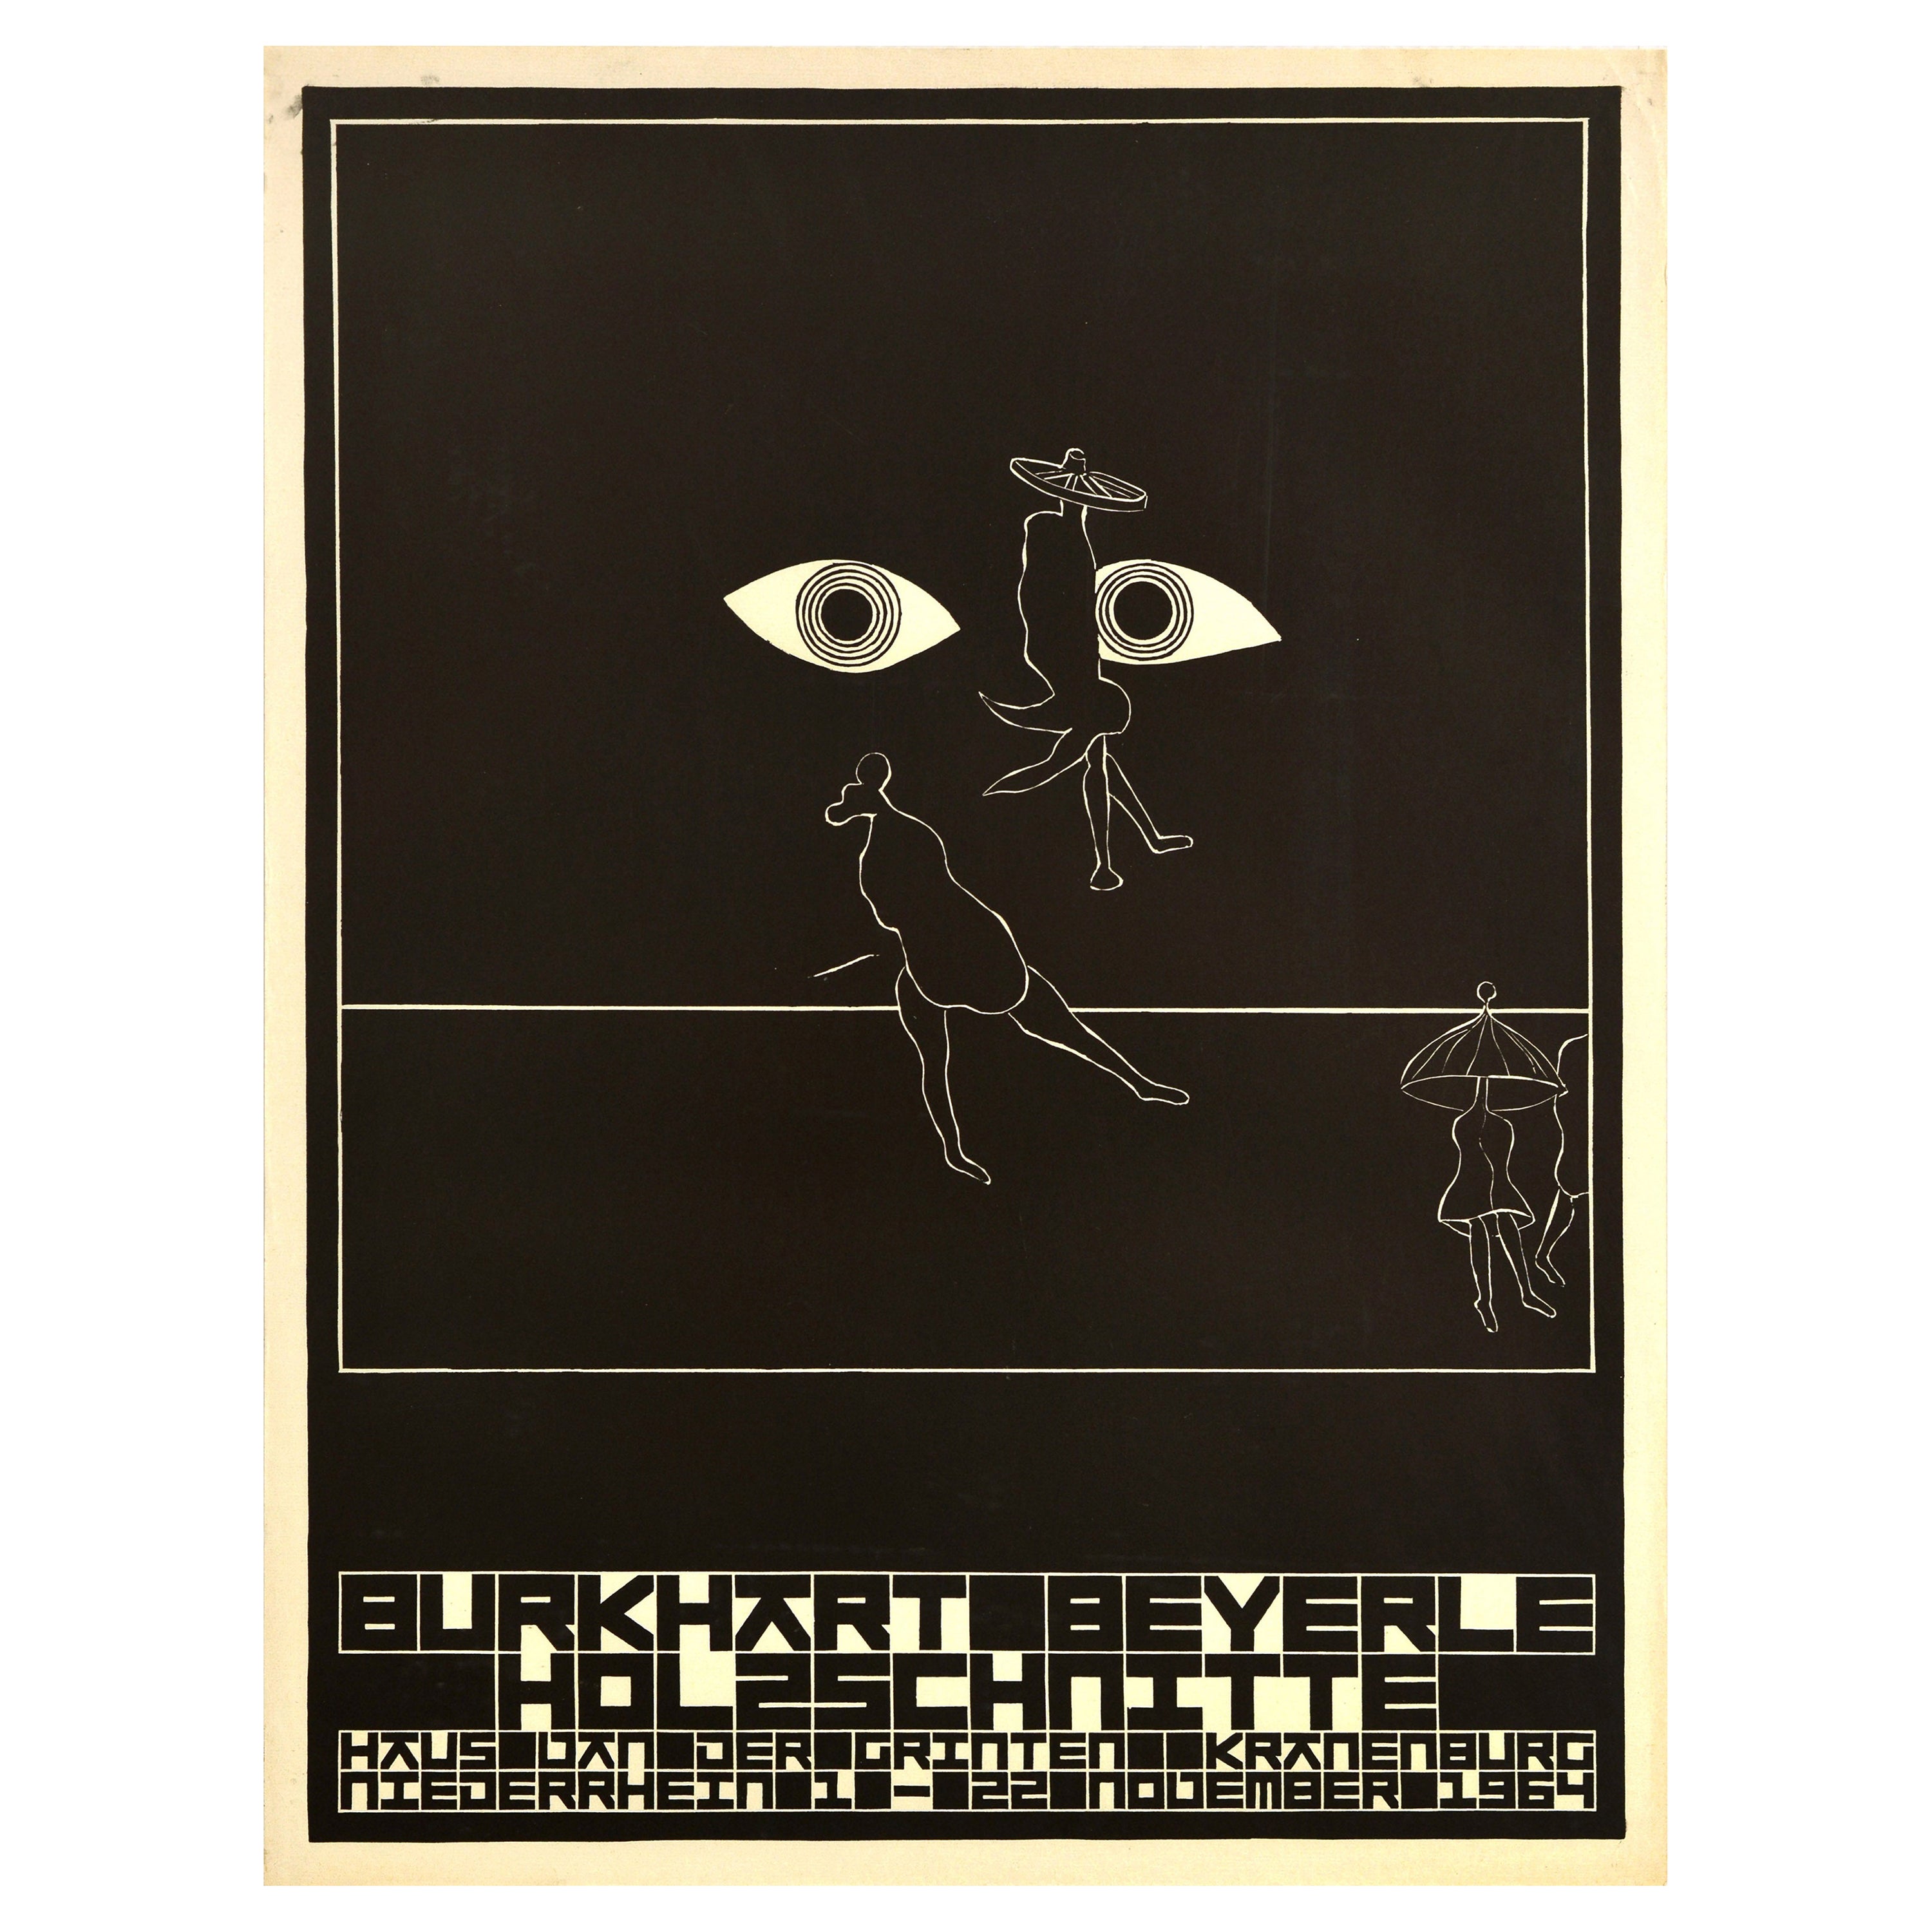 Original Vintage Advertising Poster Burkhart Beyerle Woodcuts Graphic Design Art For Sale